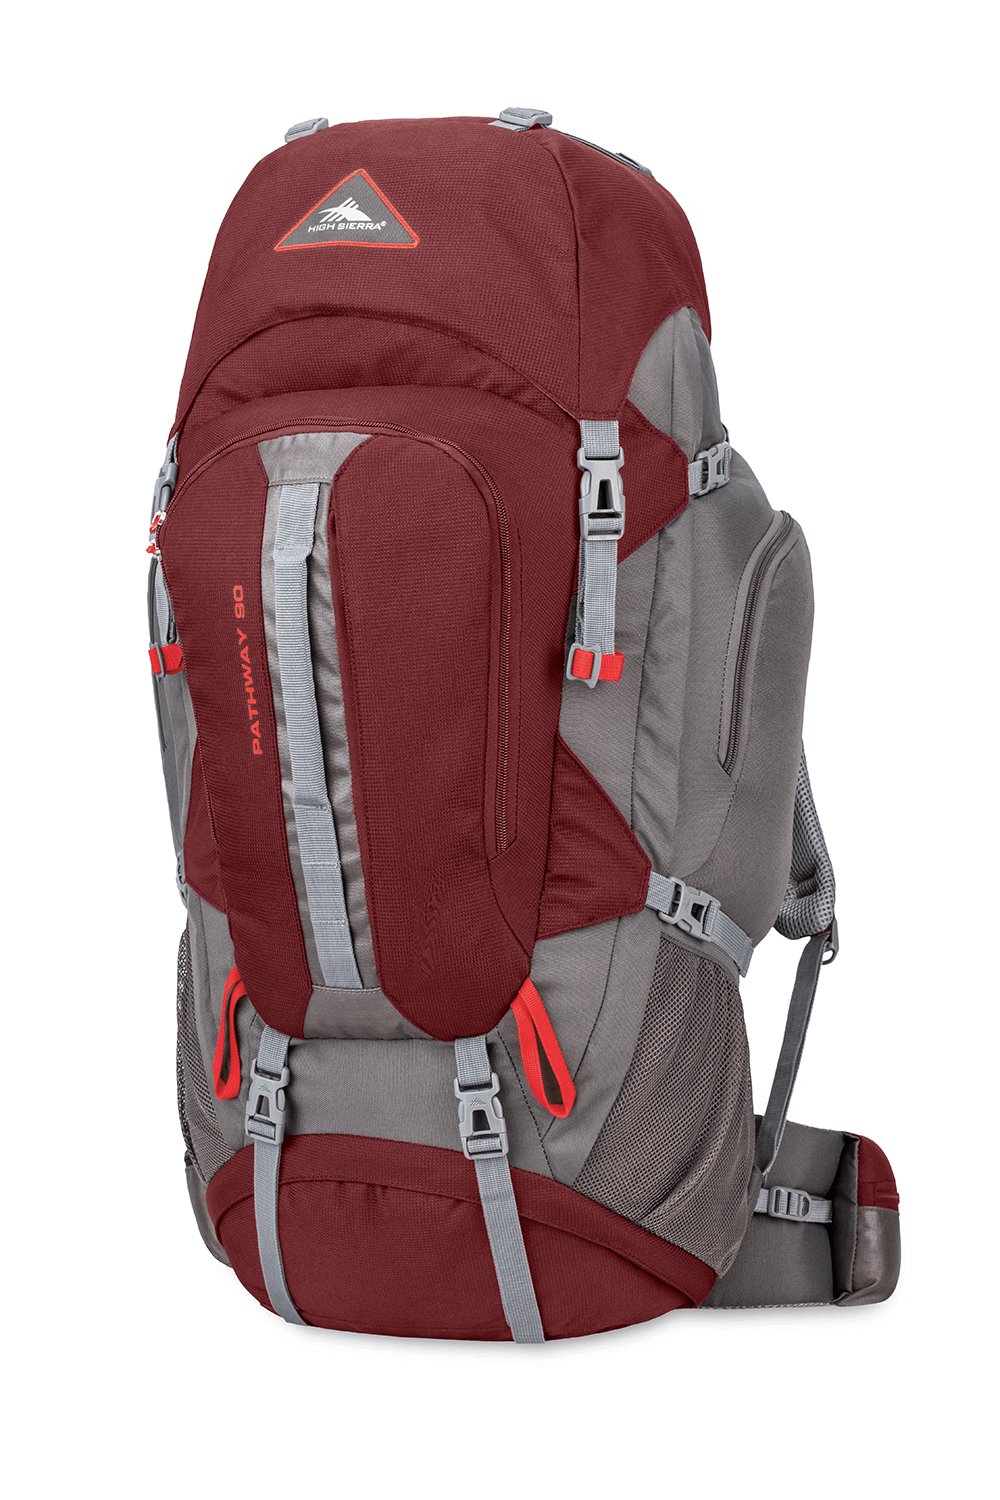 High Sierra Pathway Frame Packs 90L Backpack